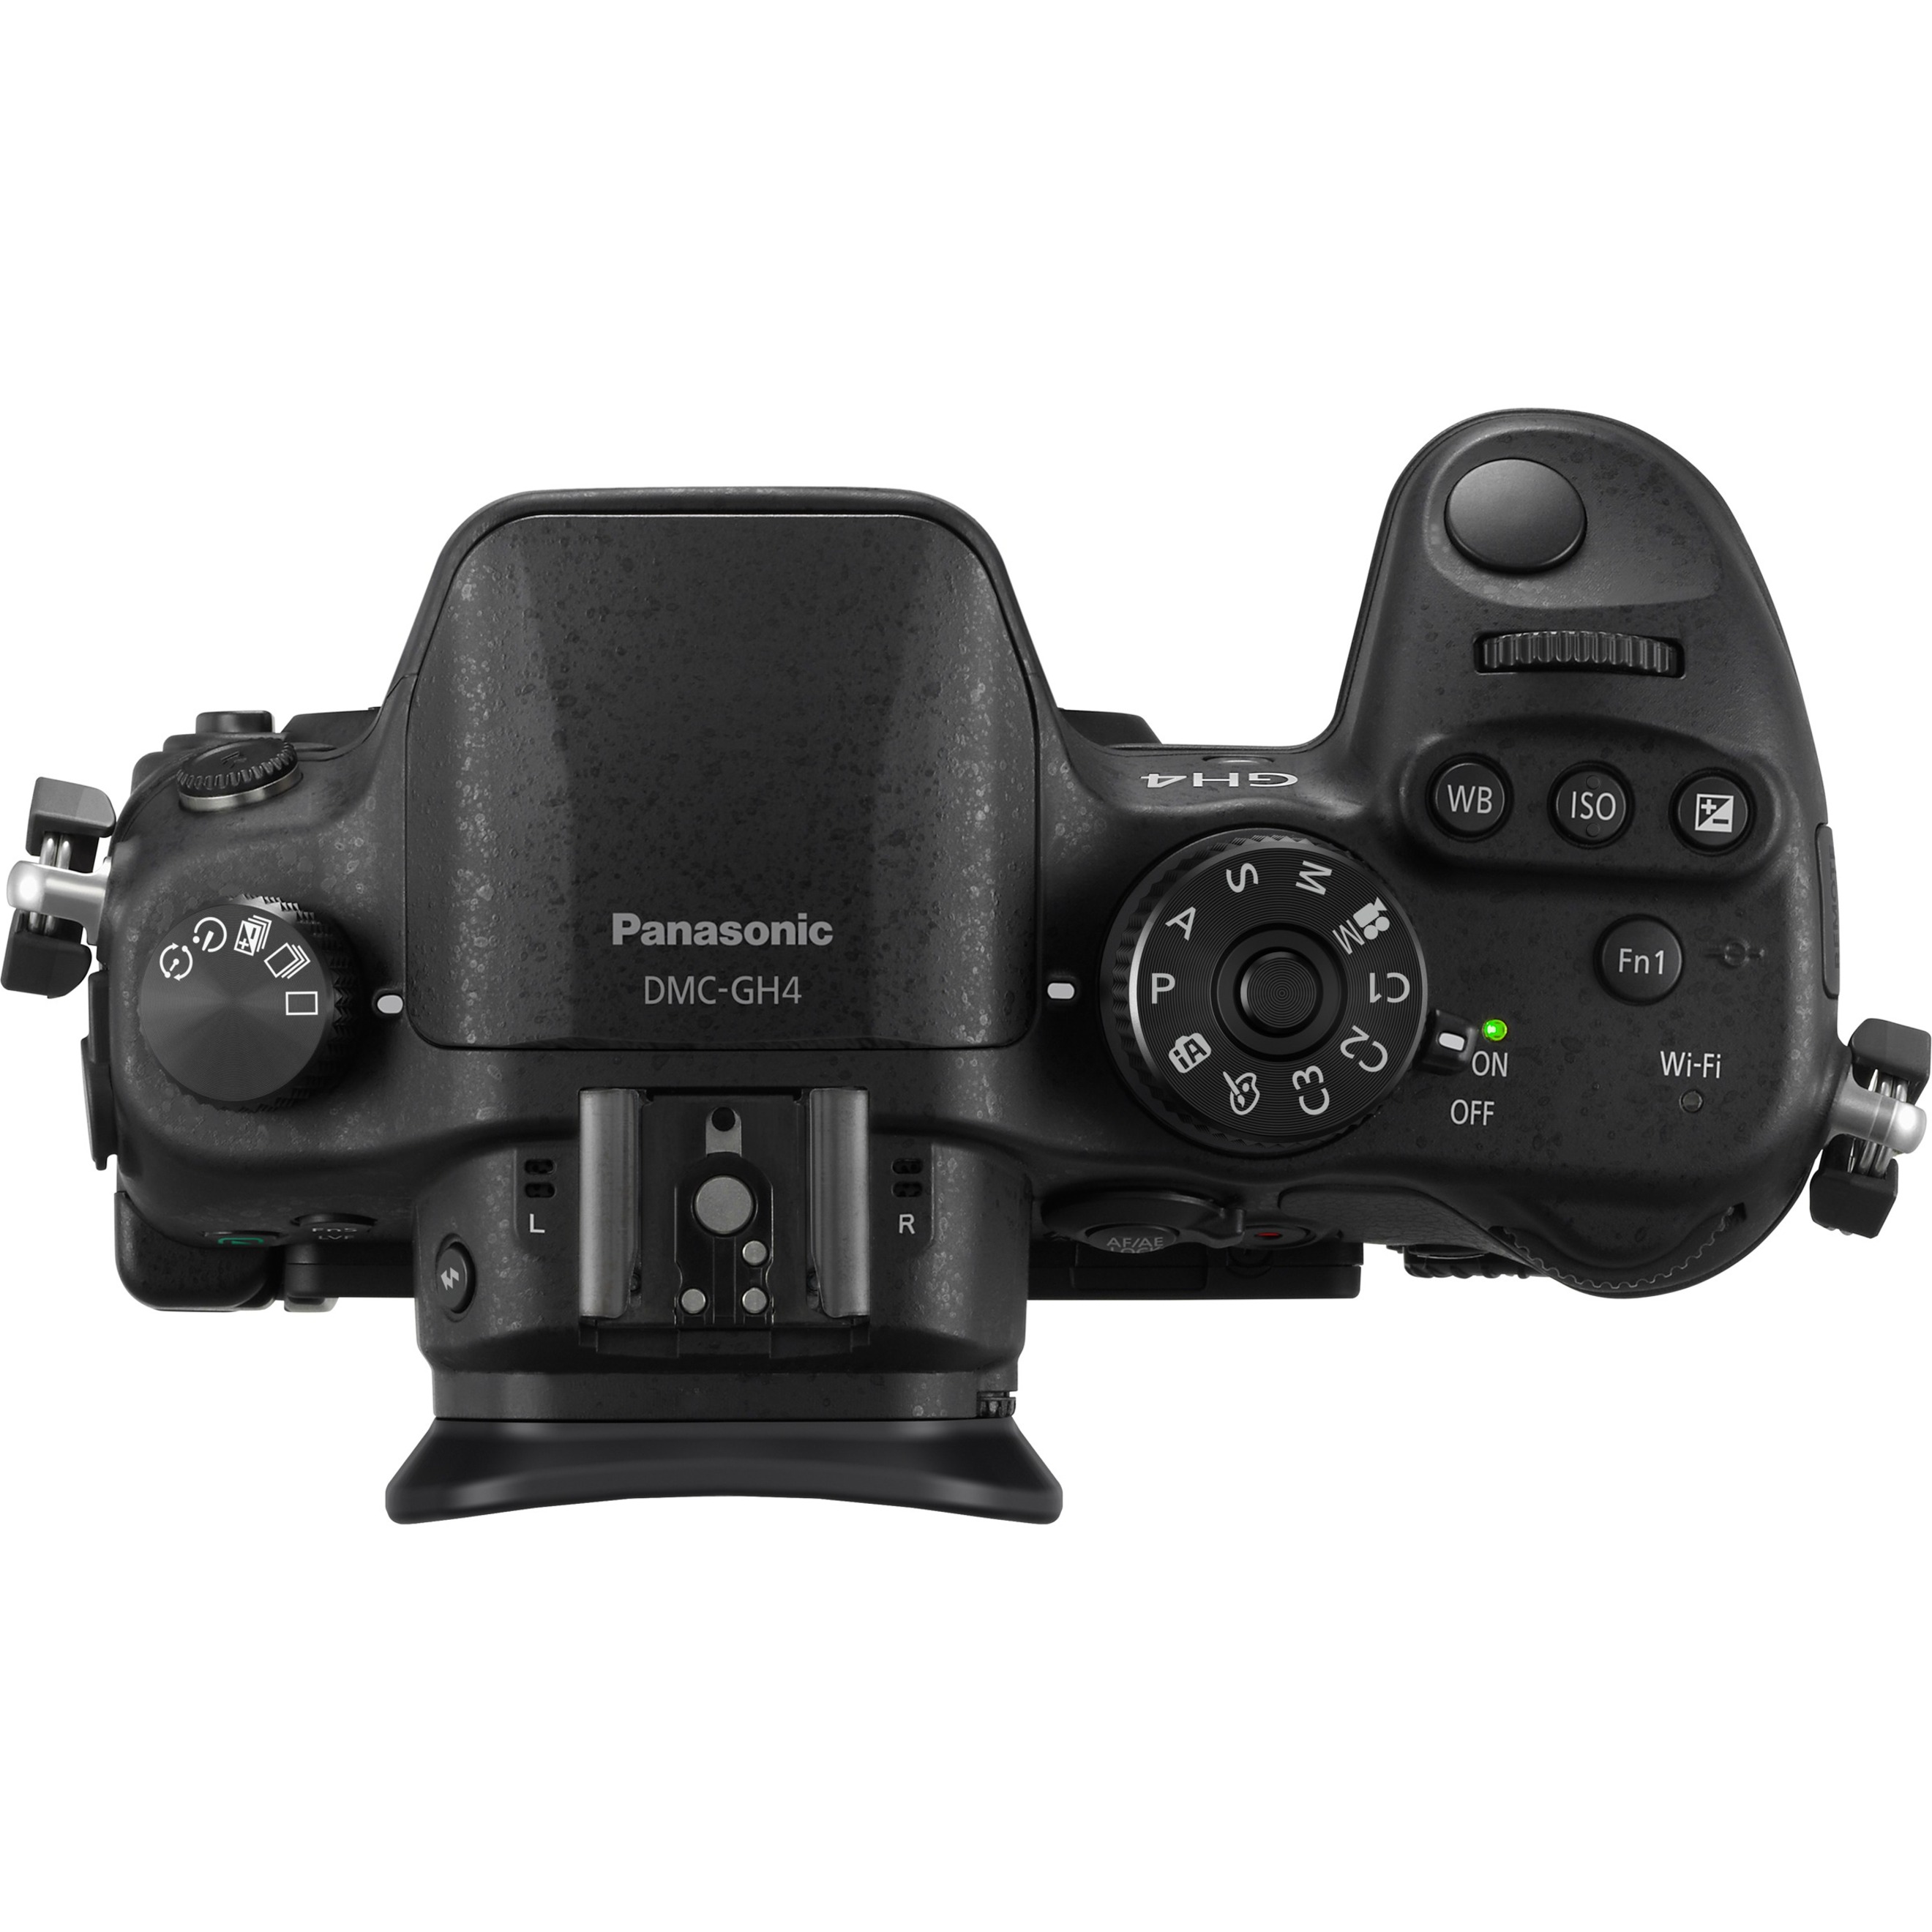 Panasonic Lumix DMC-GH4 16.1 Megapixel Mirrorless Camera with Lens, Black - image 2 of 7